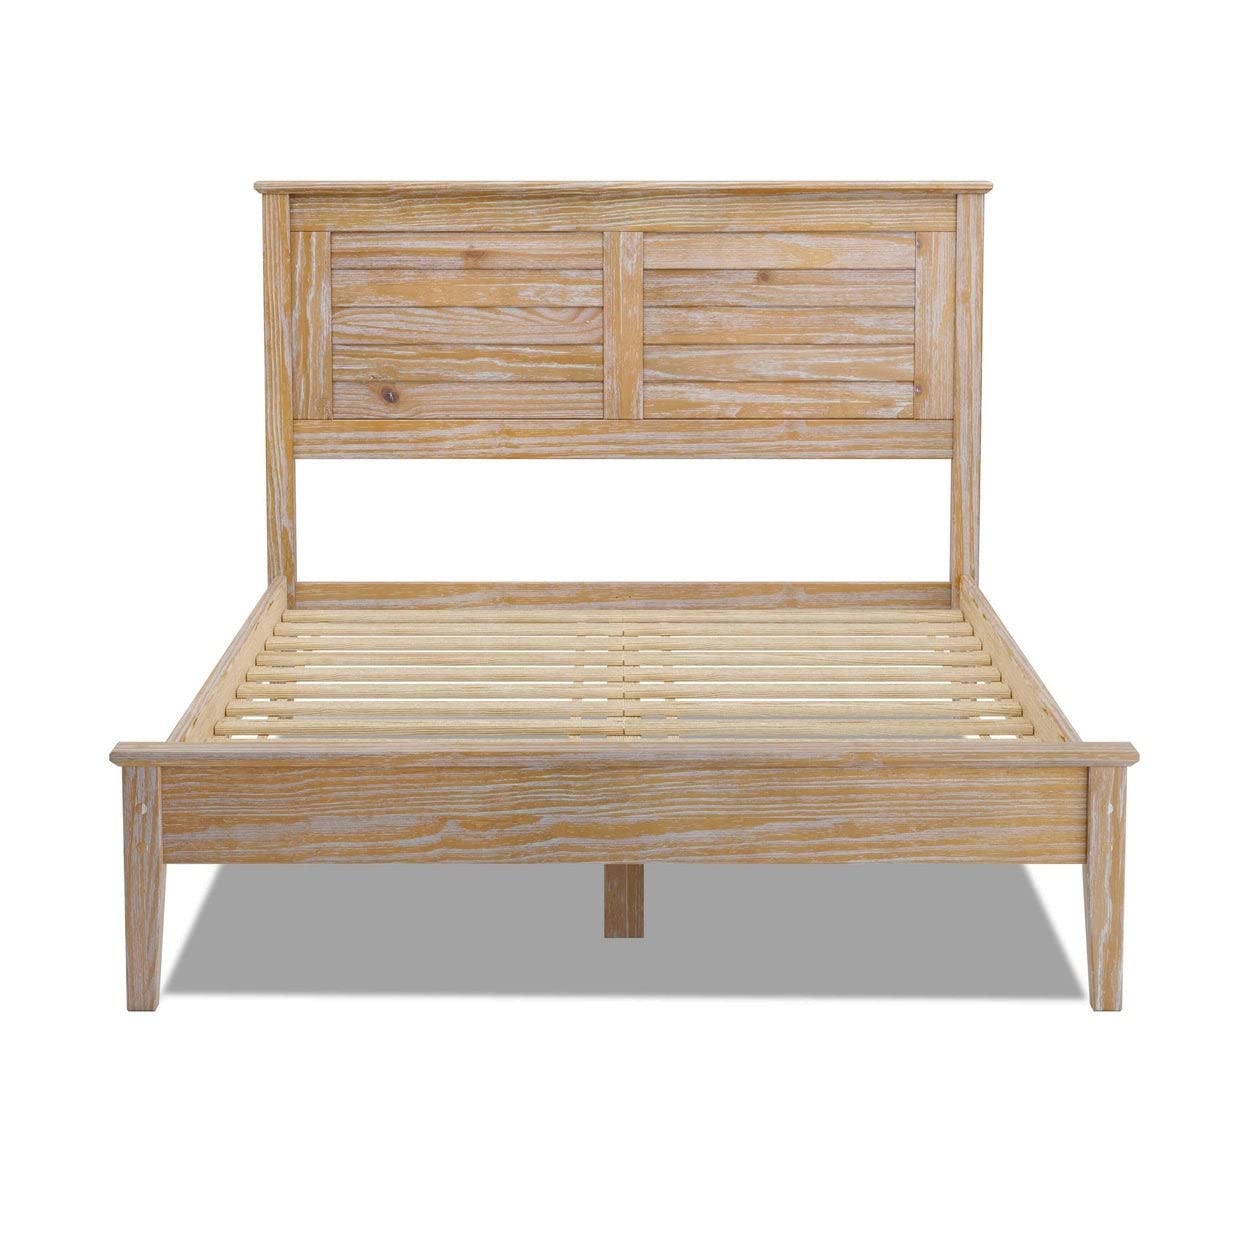 Grain Wood Furniture Greenport Solid Wood Platform Bed, Full Size, Brushed Driftwood